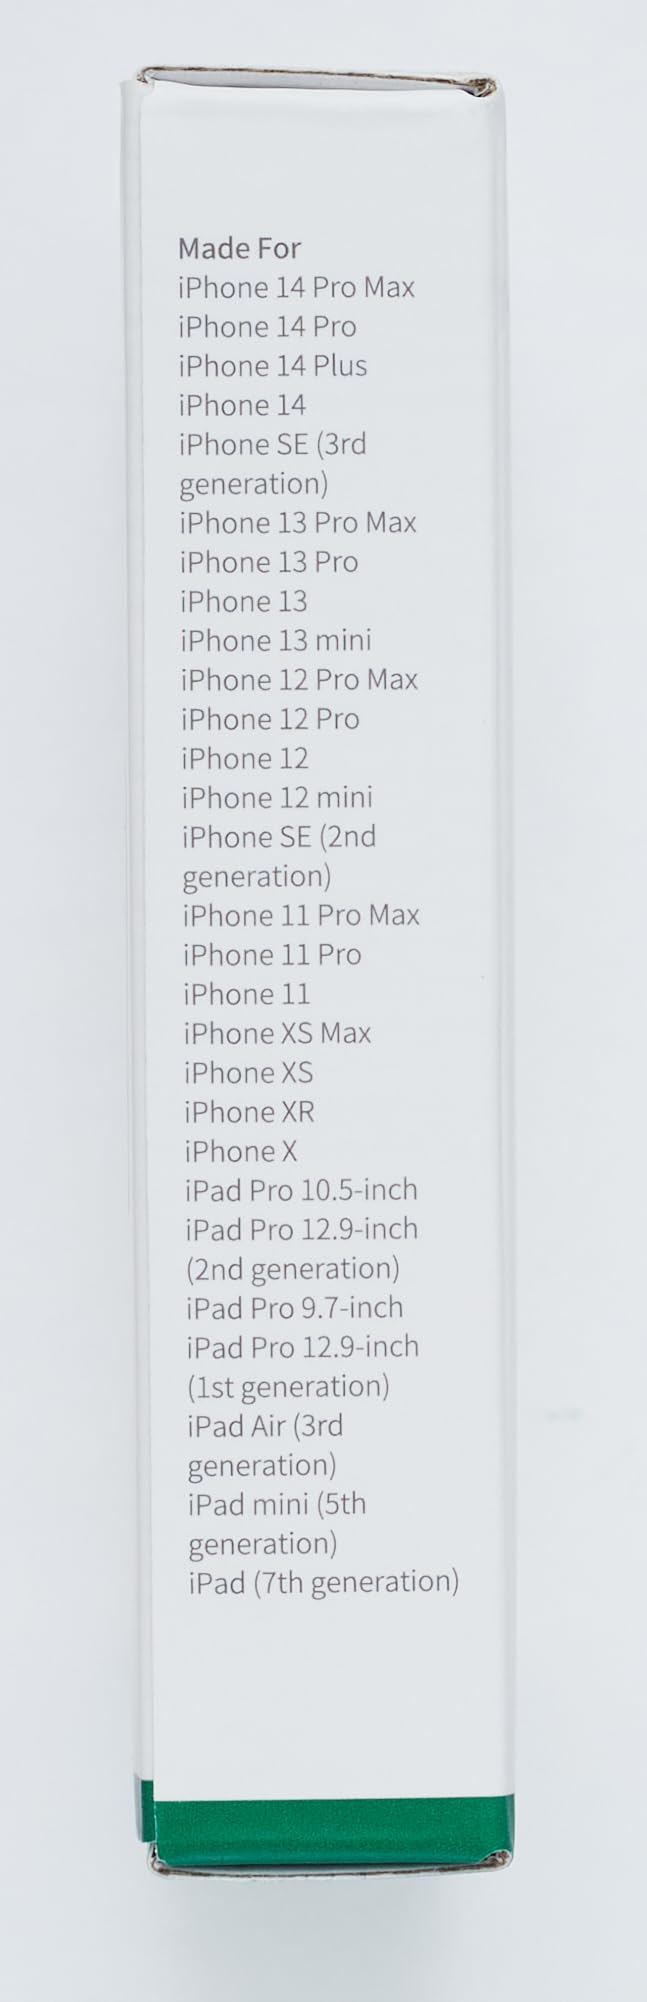 UGREEN USB C naar Lightning Oplaadkabel Wit MFi Lightning USB C Kabel PD 3.0 compatibel met iPhone 14 Pro Max, iPhone 13 Mini, iPhone 12, iPhone SE, iPad 2021 iPad 2020 AirPods Pro enz. (2M)